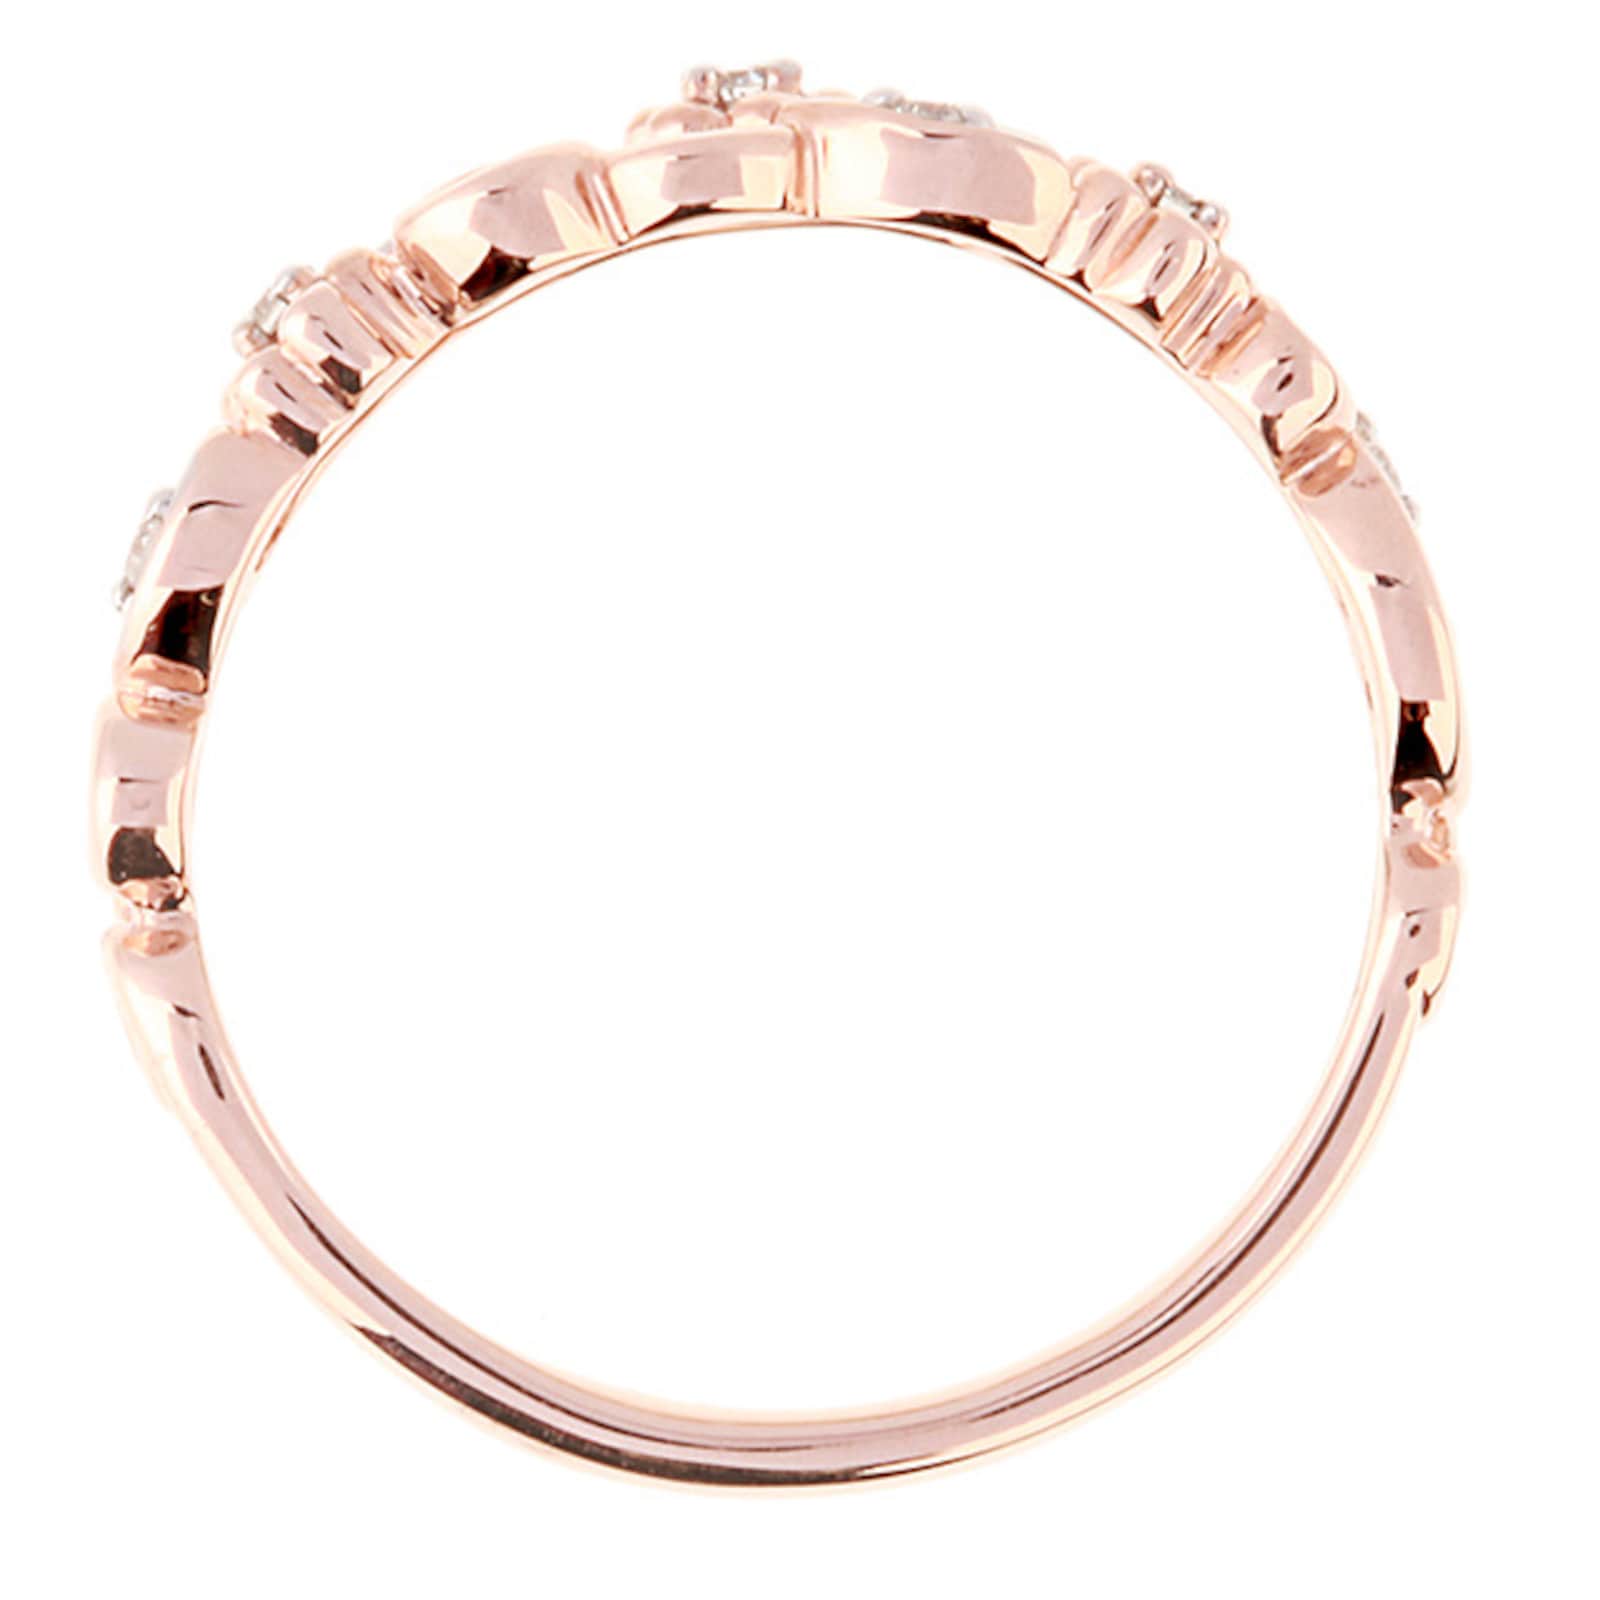 Goldsmiths Brilliant Cut Diamond Ring In 9 Carat Rose Gold R29735D69KPW ...